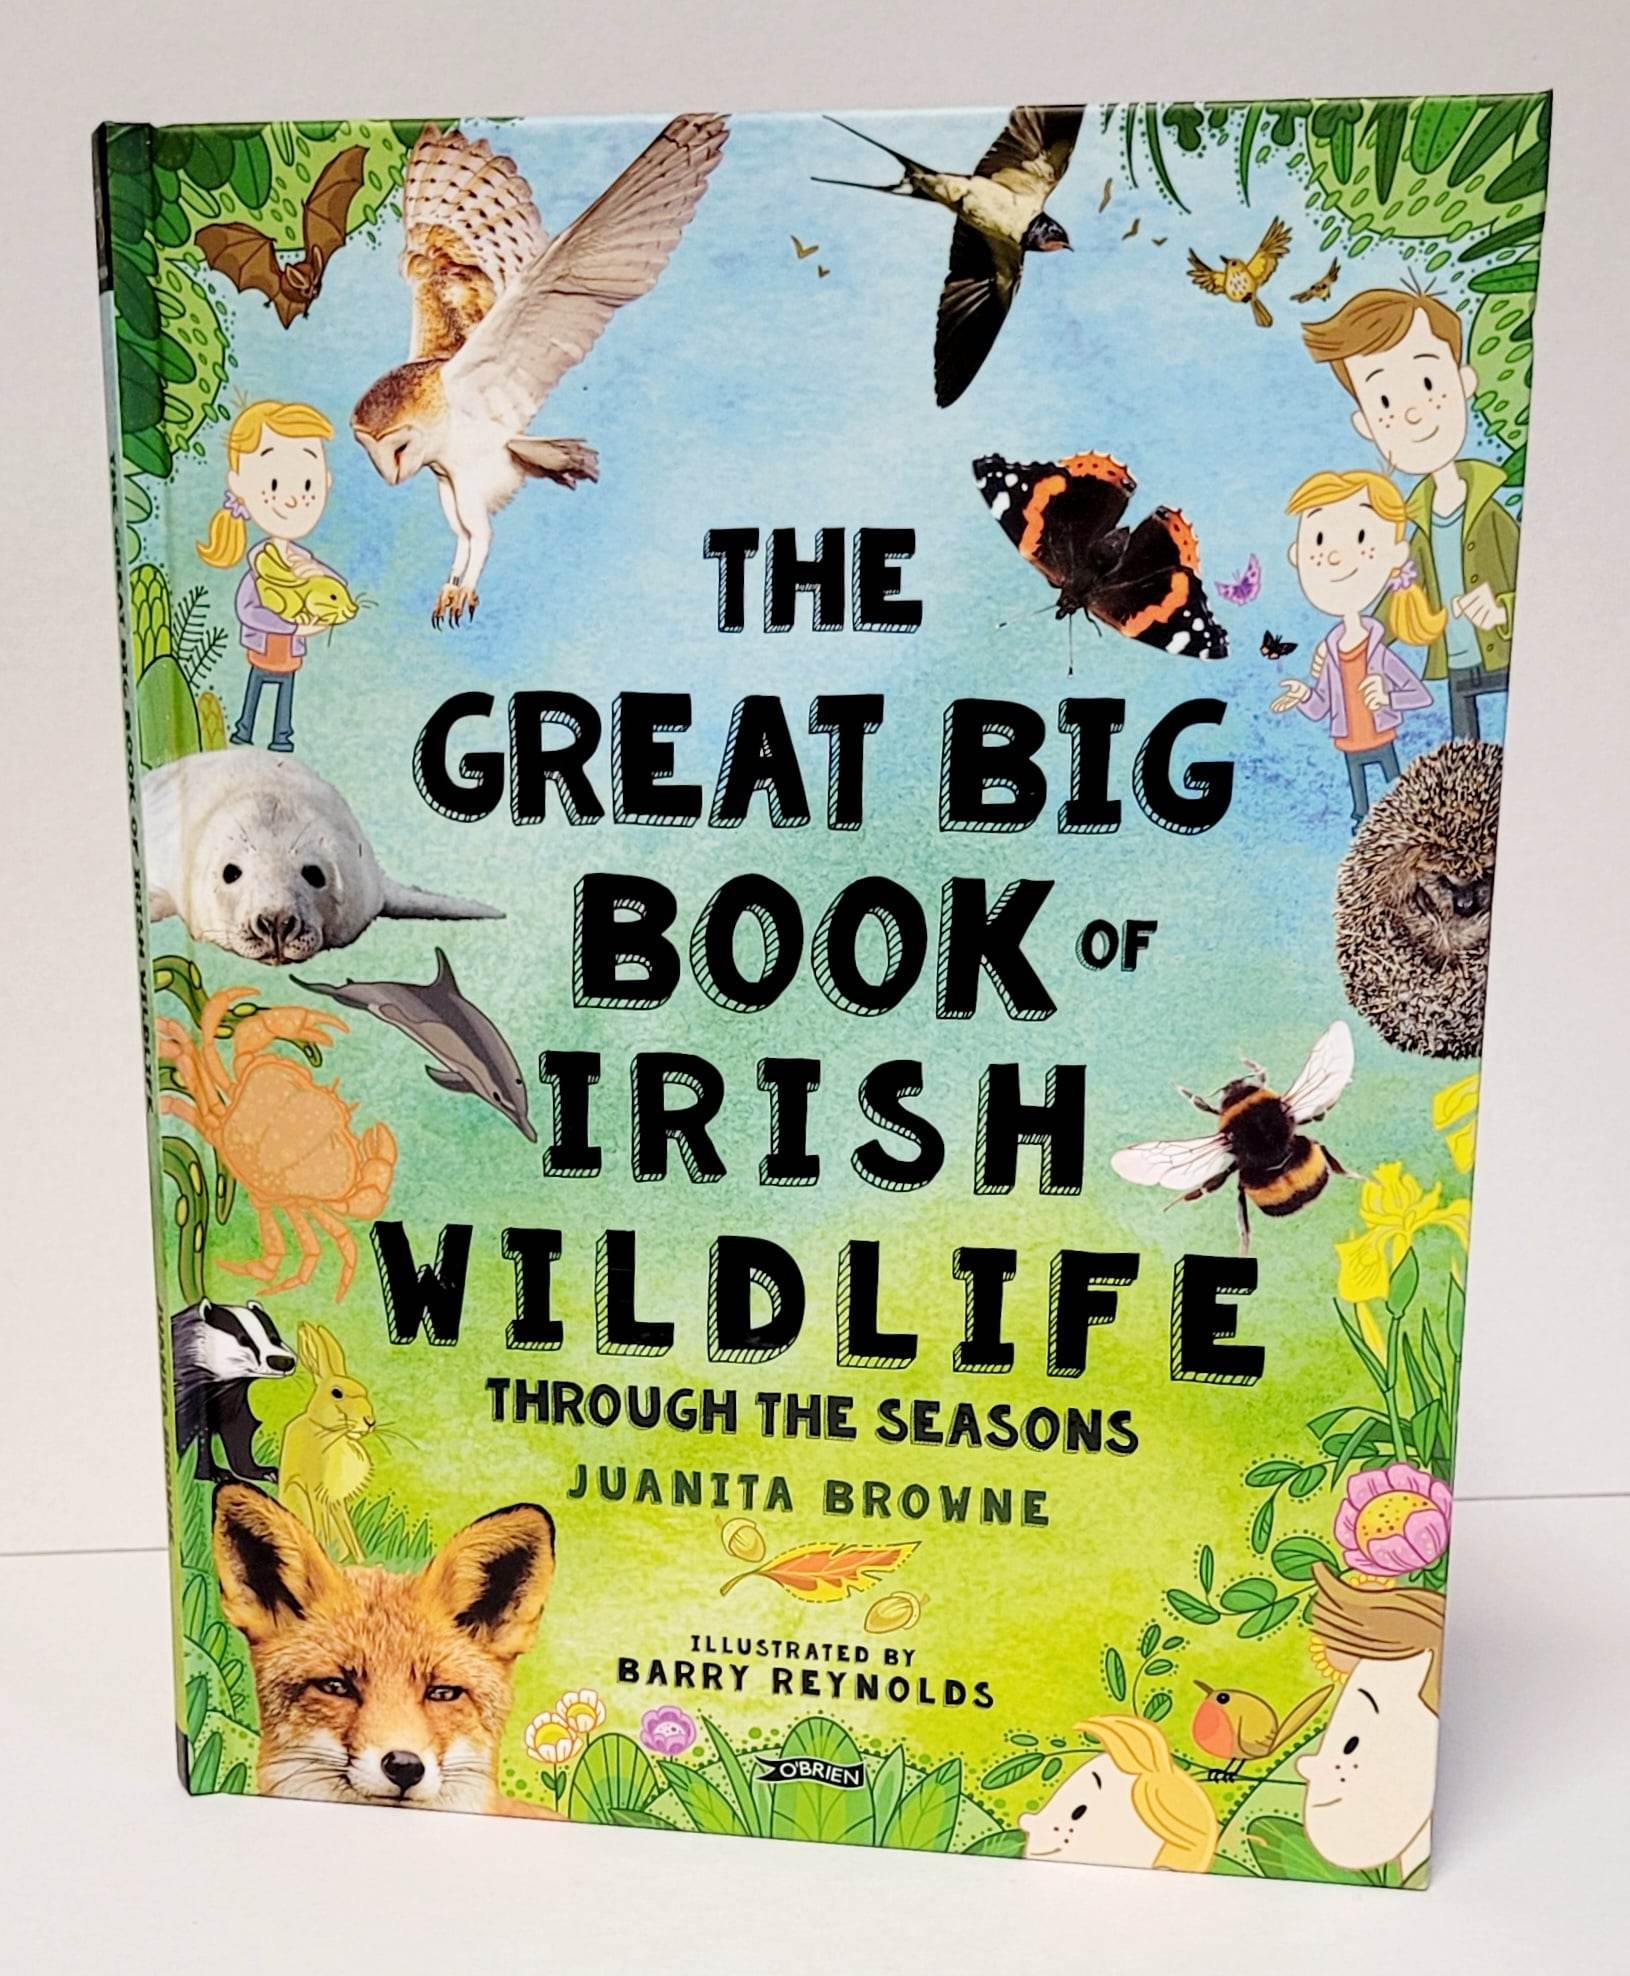 The Great Big Book of Irish Wildlife through the seasons by Juanita Browne